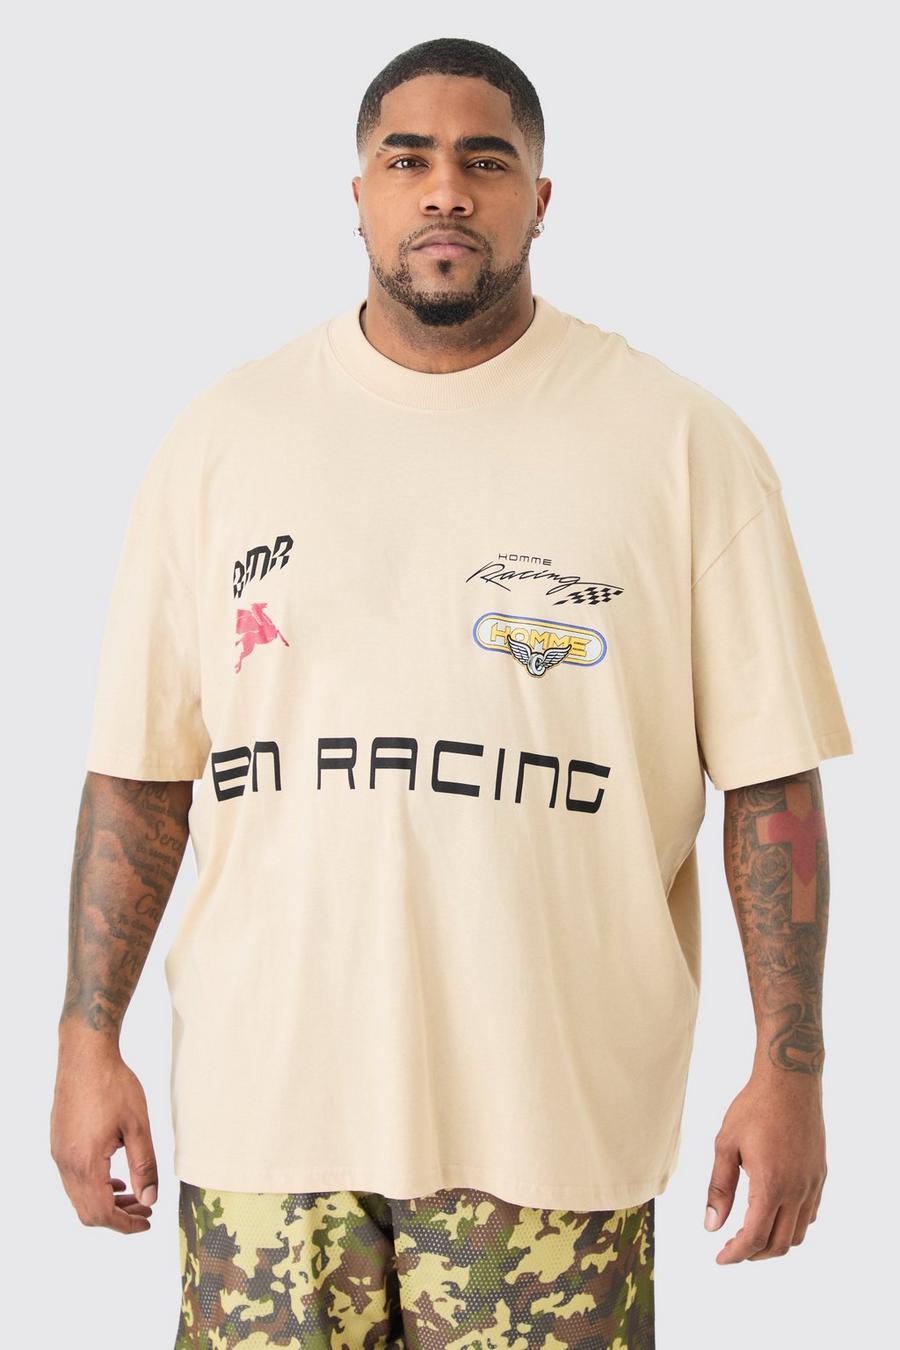 Plus Oversize T-Shirt mit Bm Moto Racing Print, Sand